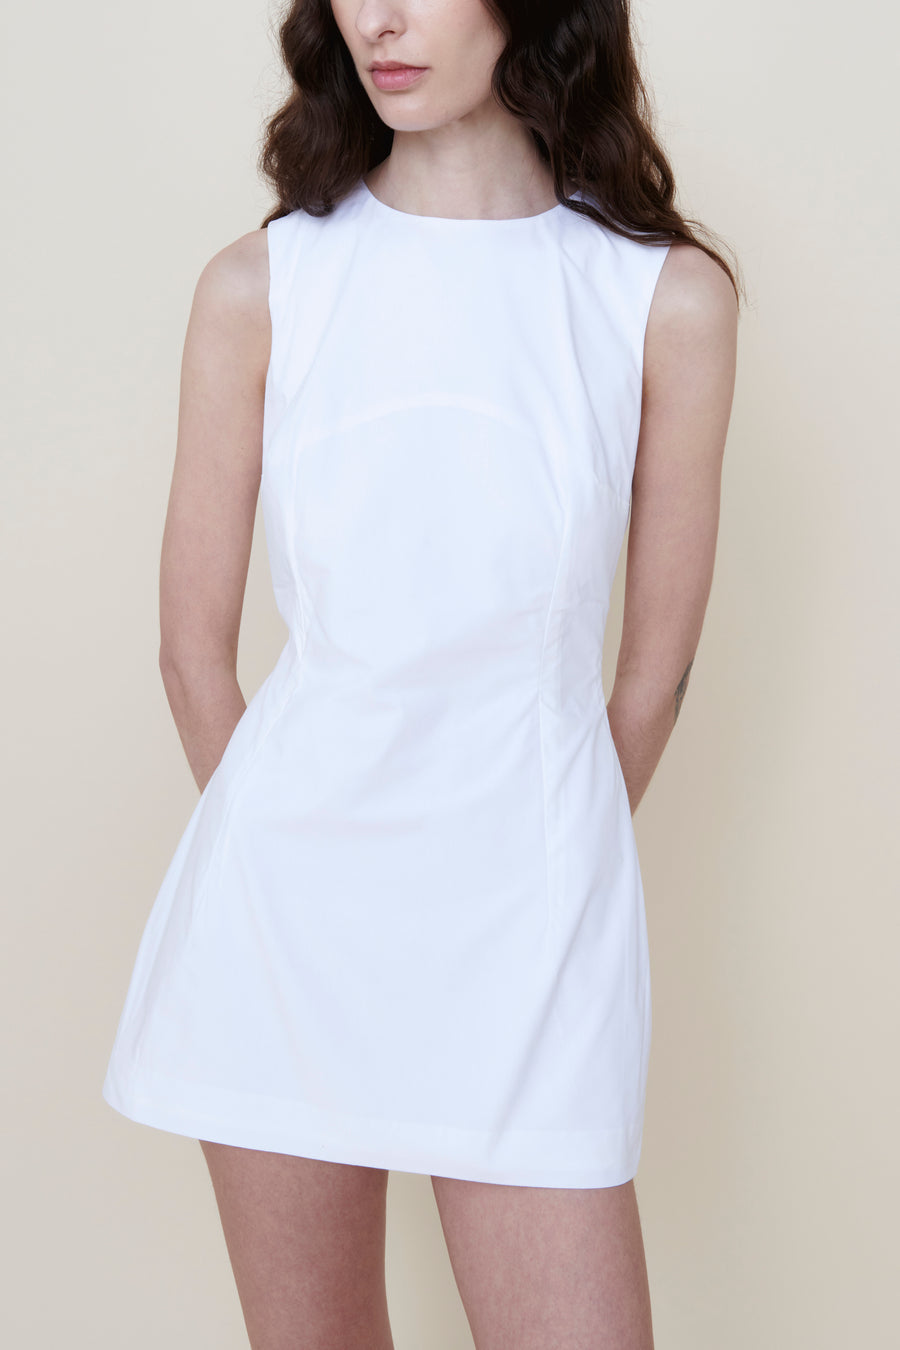 The Mini Nori Dress in White Poplin